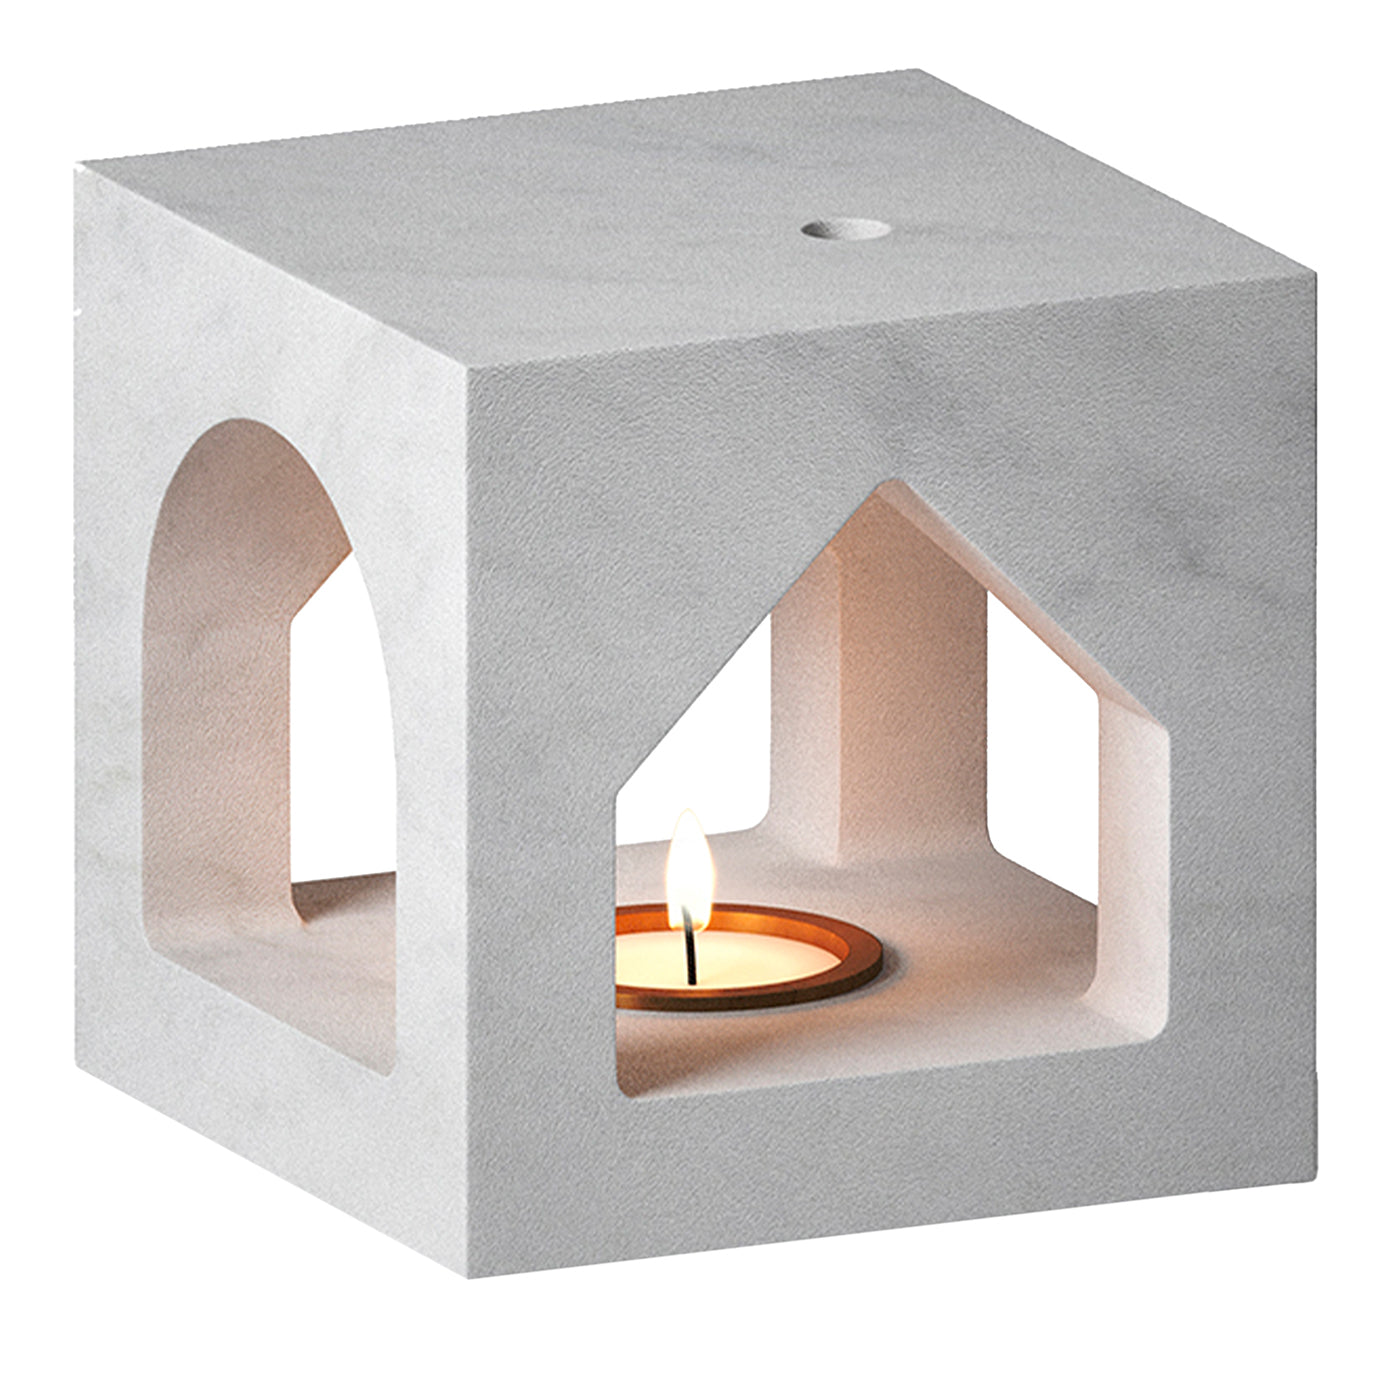 The Village - MA House Carrara-Kerzenhalter von Kengo Kuma - Hauptansicht